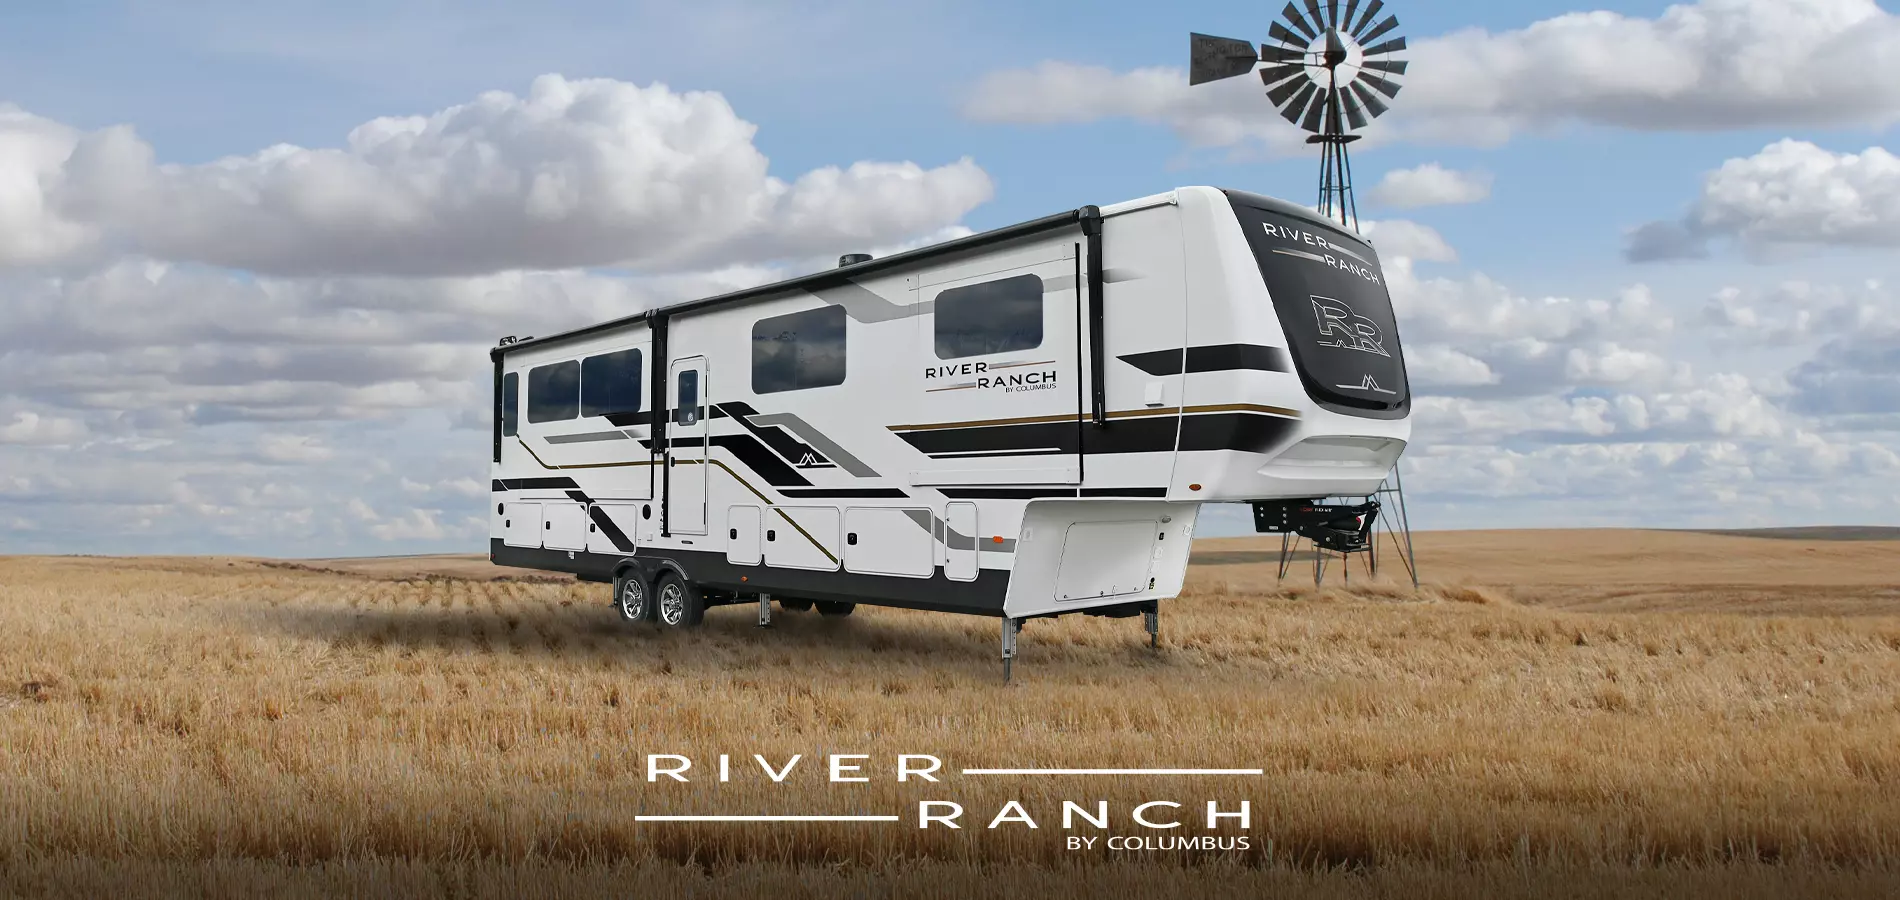 River Ranch RVs